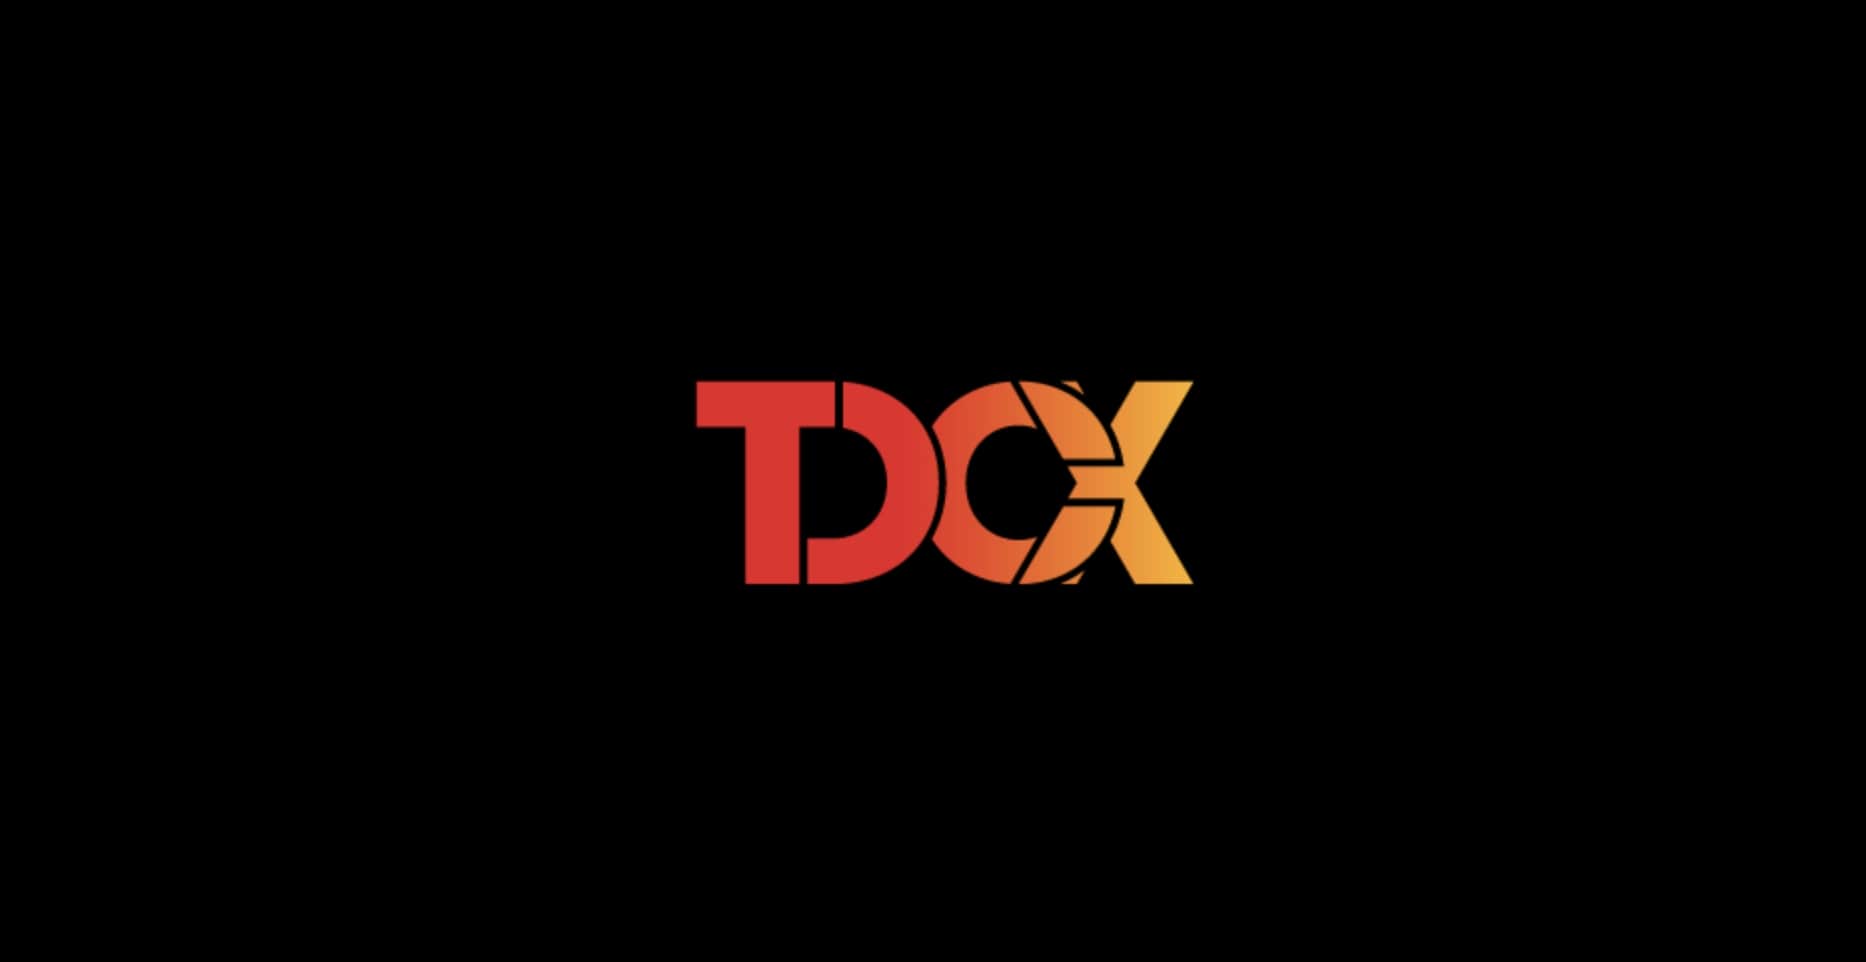 TDCX Logo on Black Background